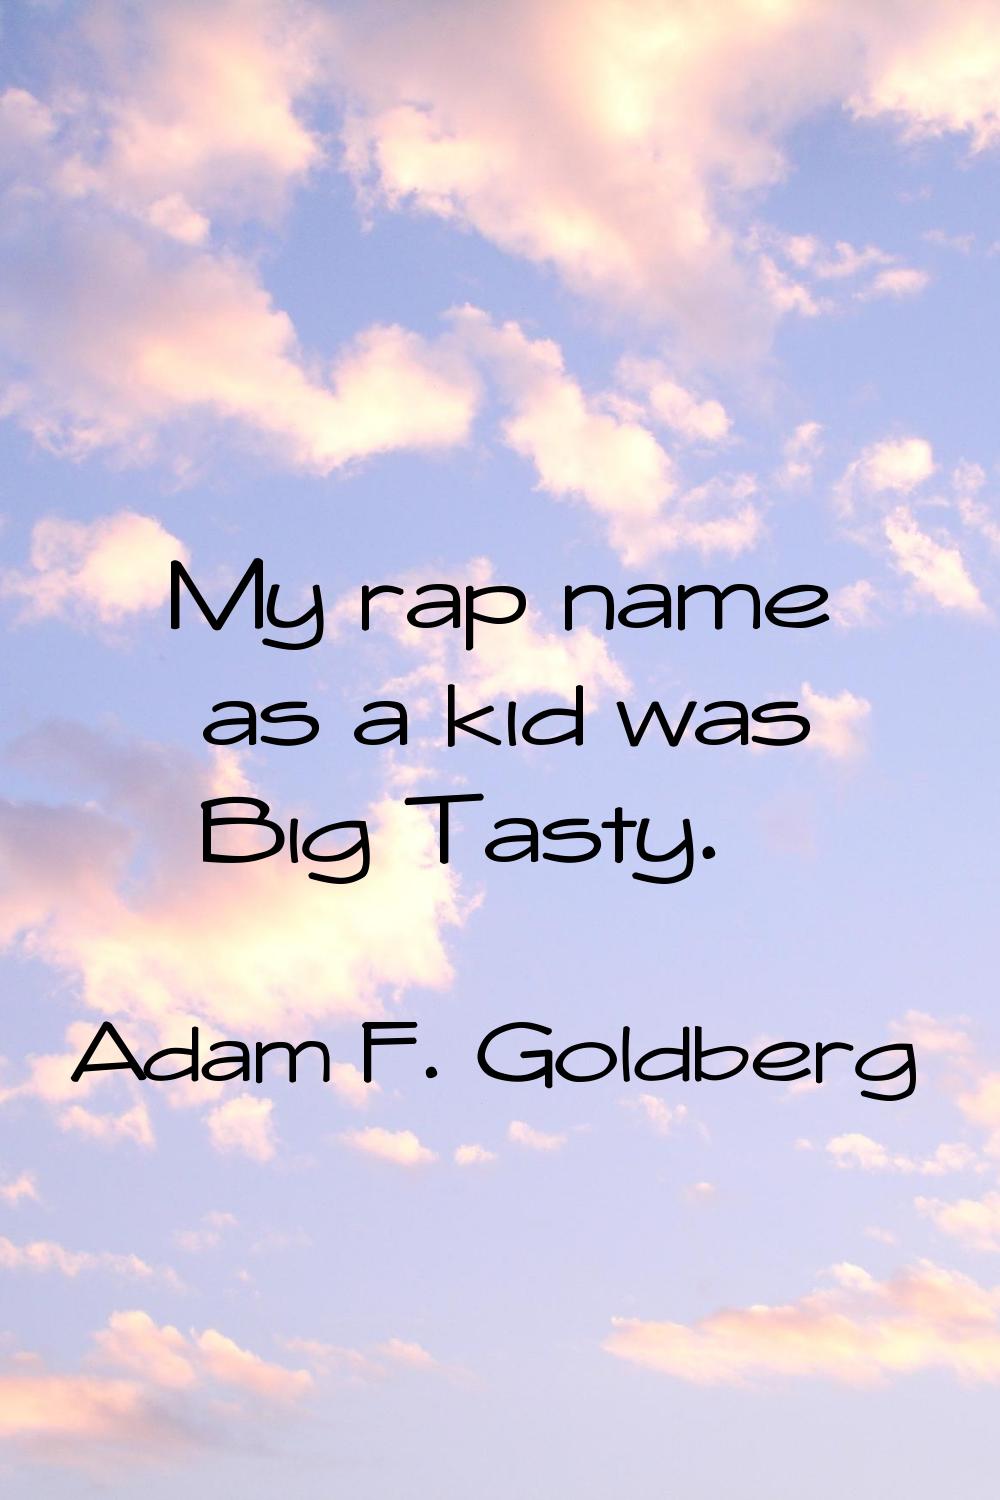 My rap name as a kid was Big Tasty.